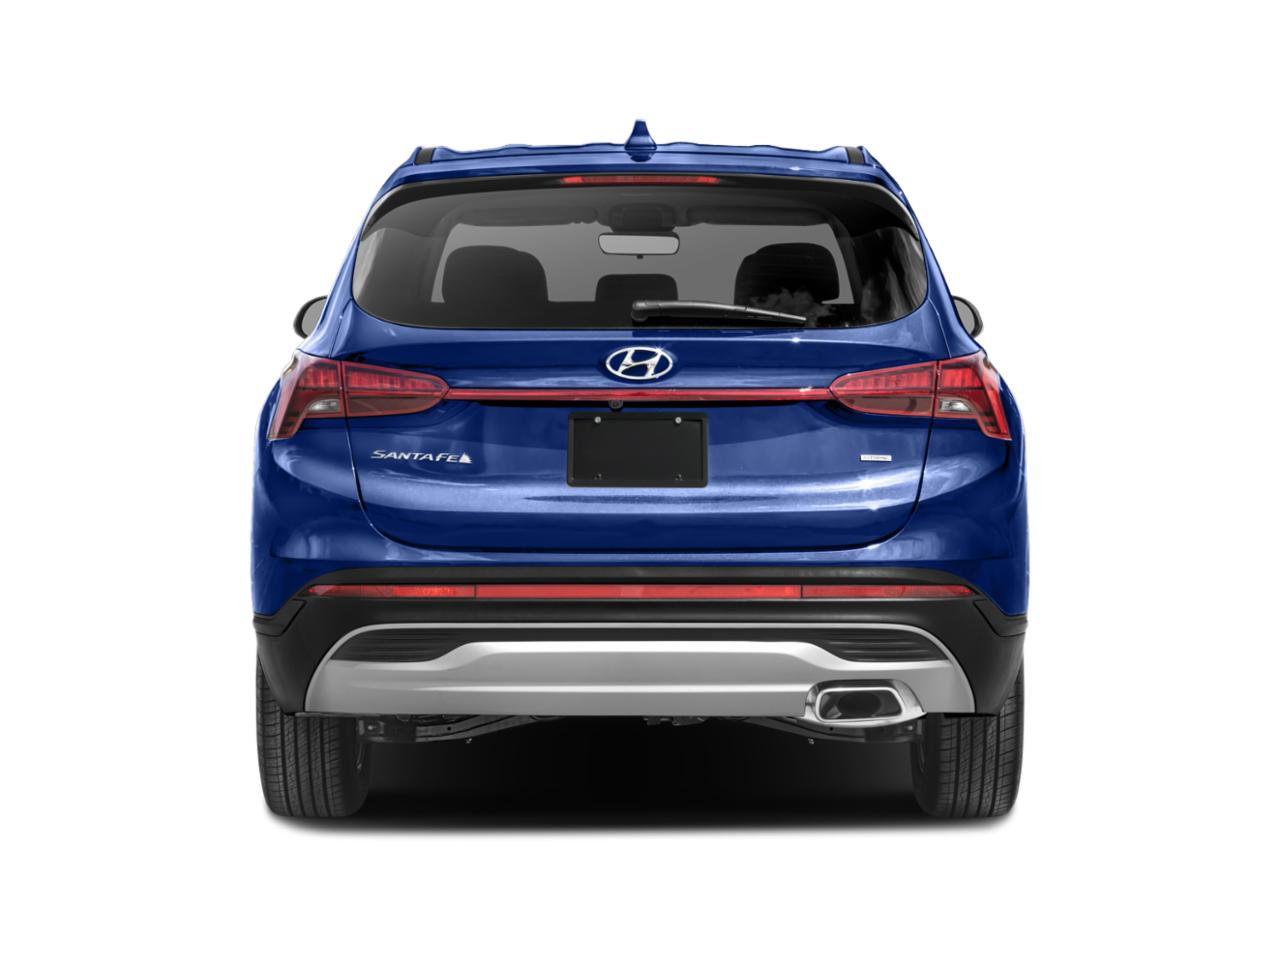 New 2023 Hyundai Santa Fe Wright Way Hyundai